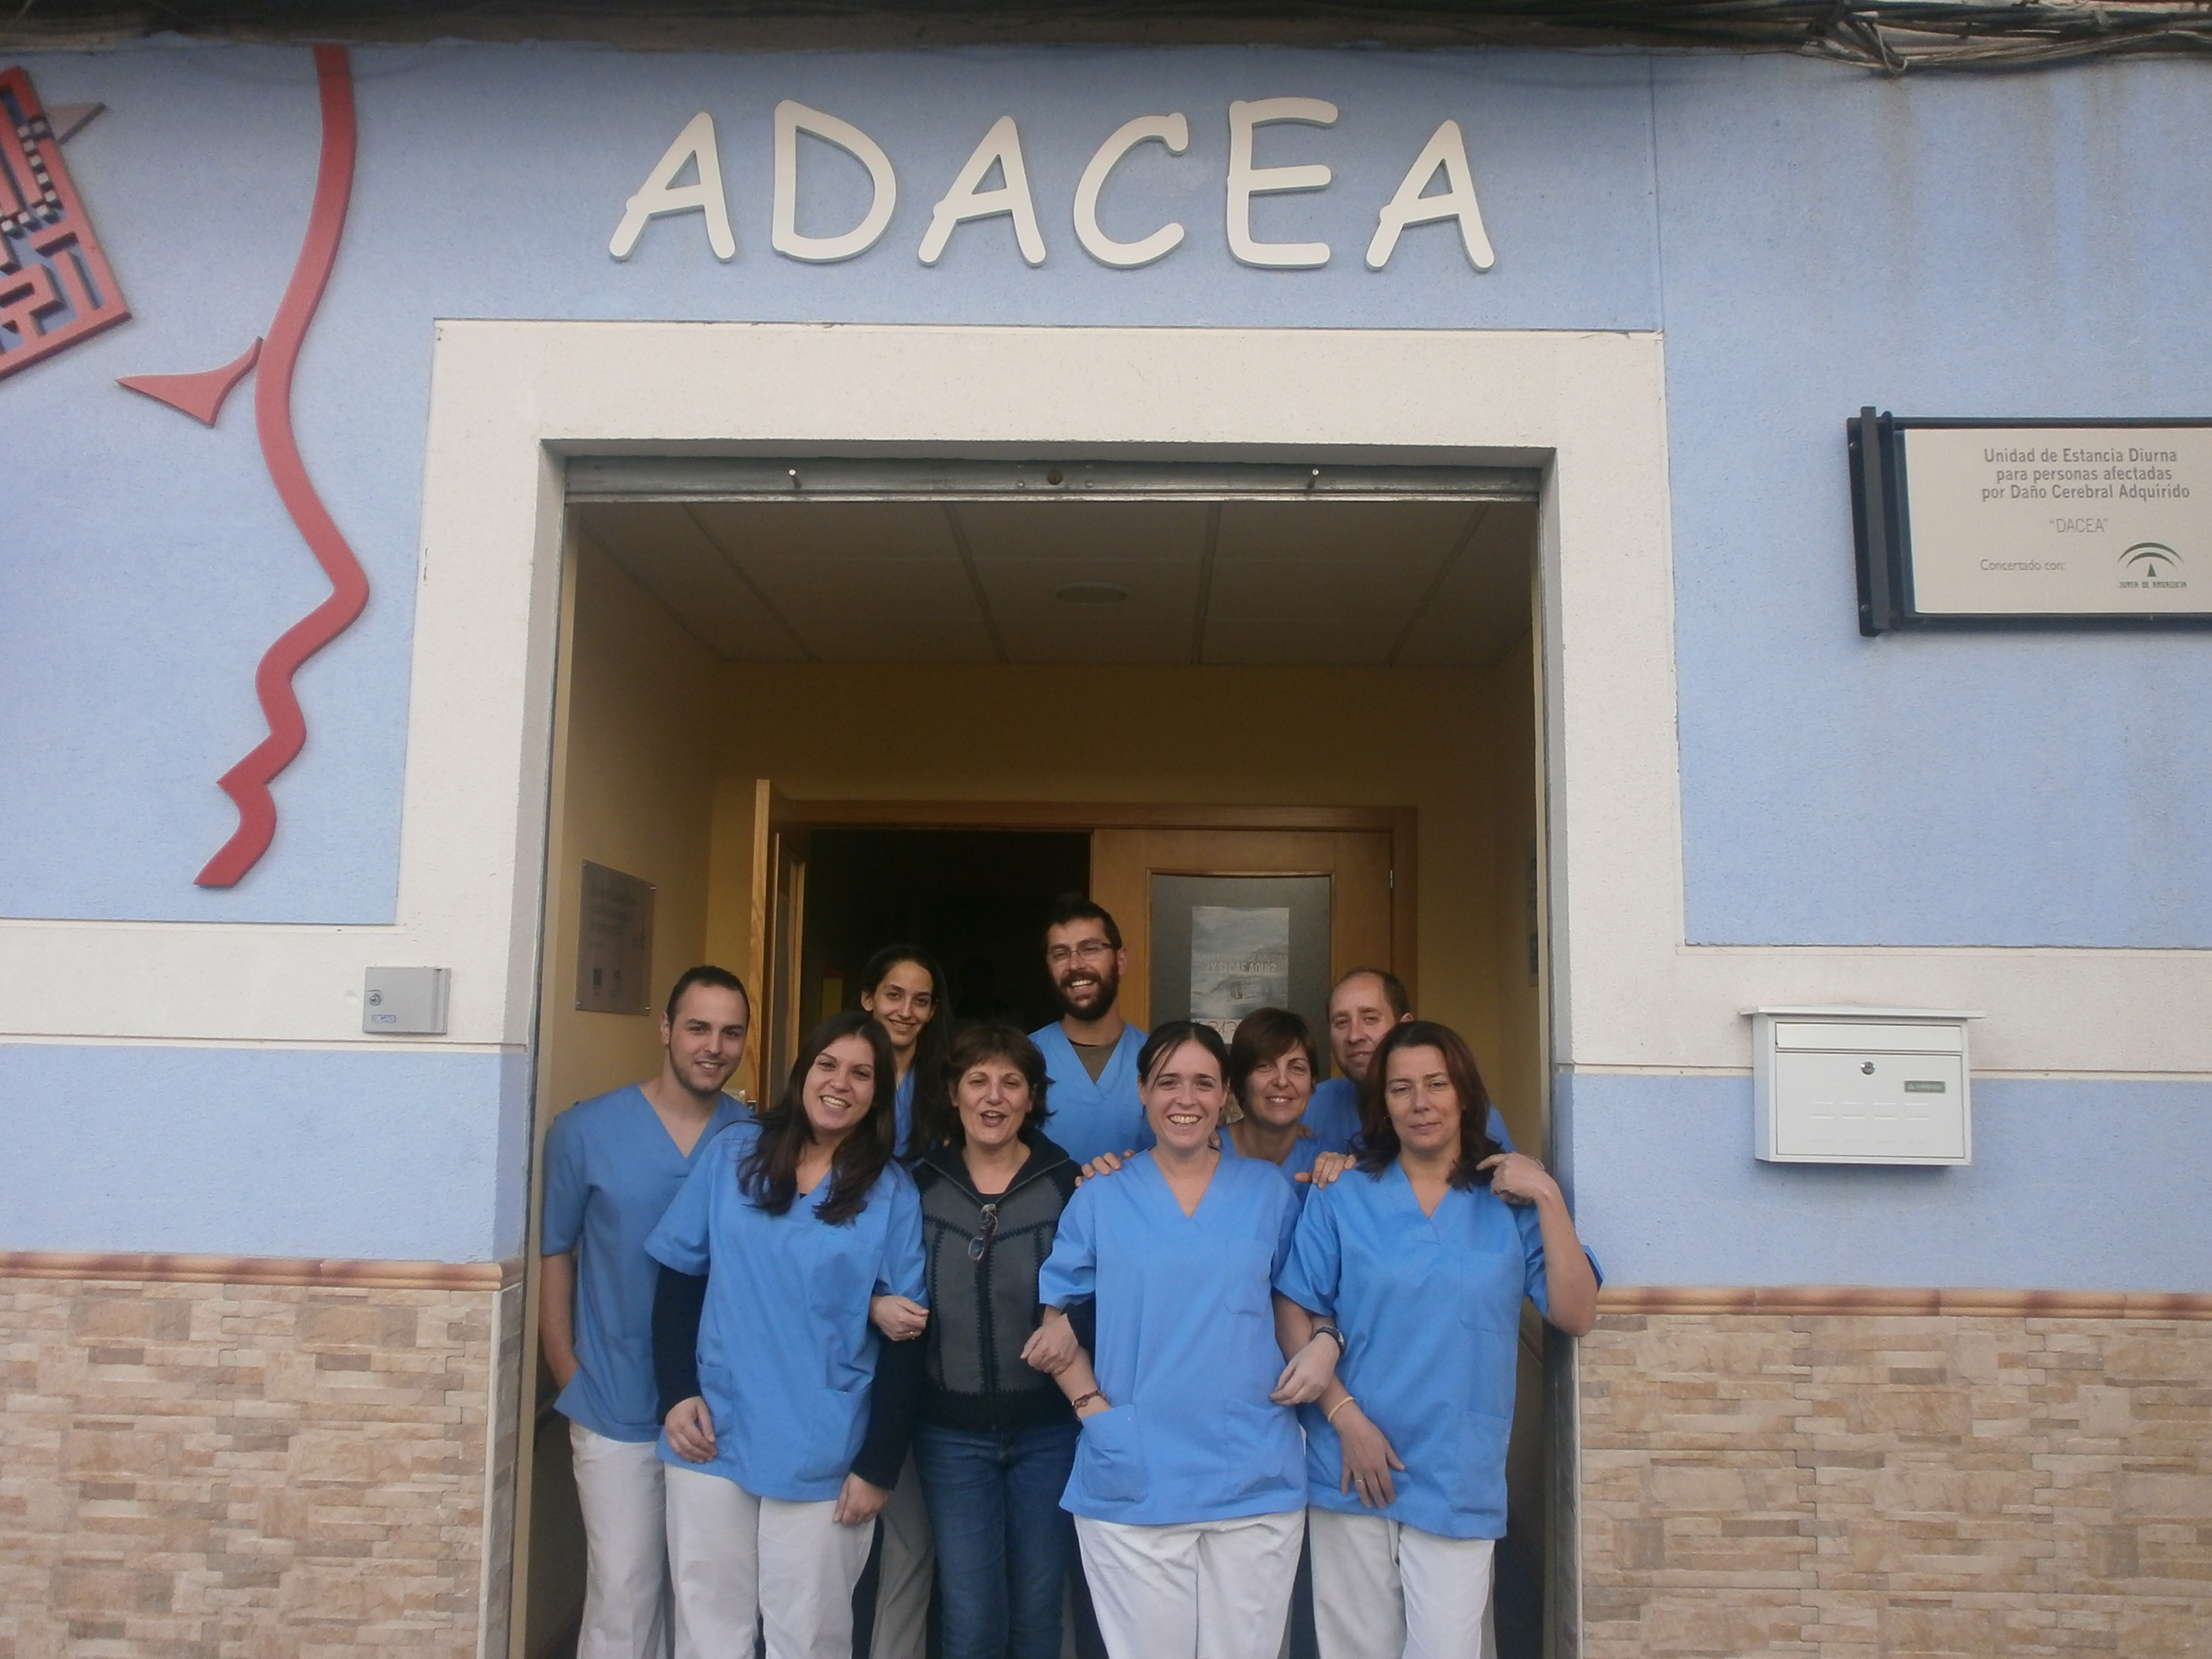 ADACEA - Asociación de daño cerebral adquirido de Jaén